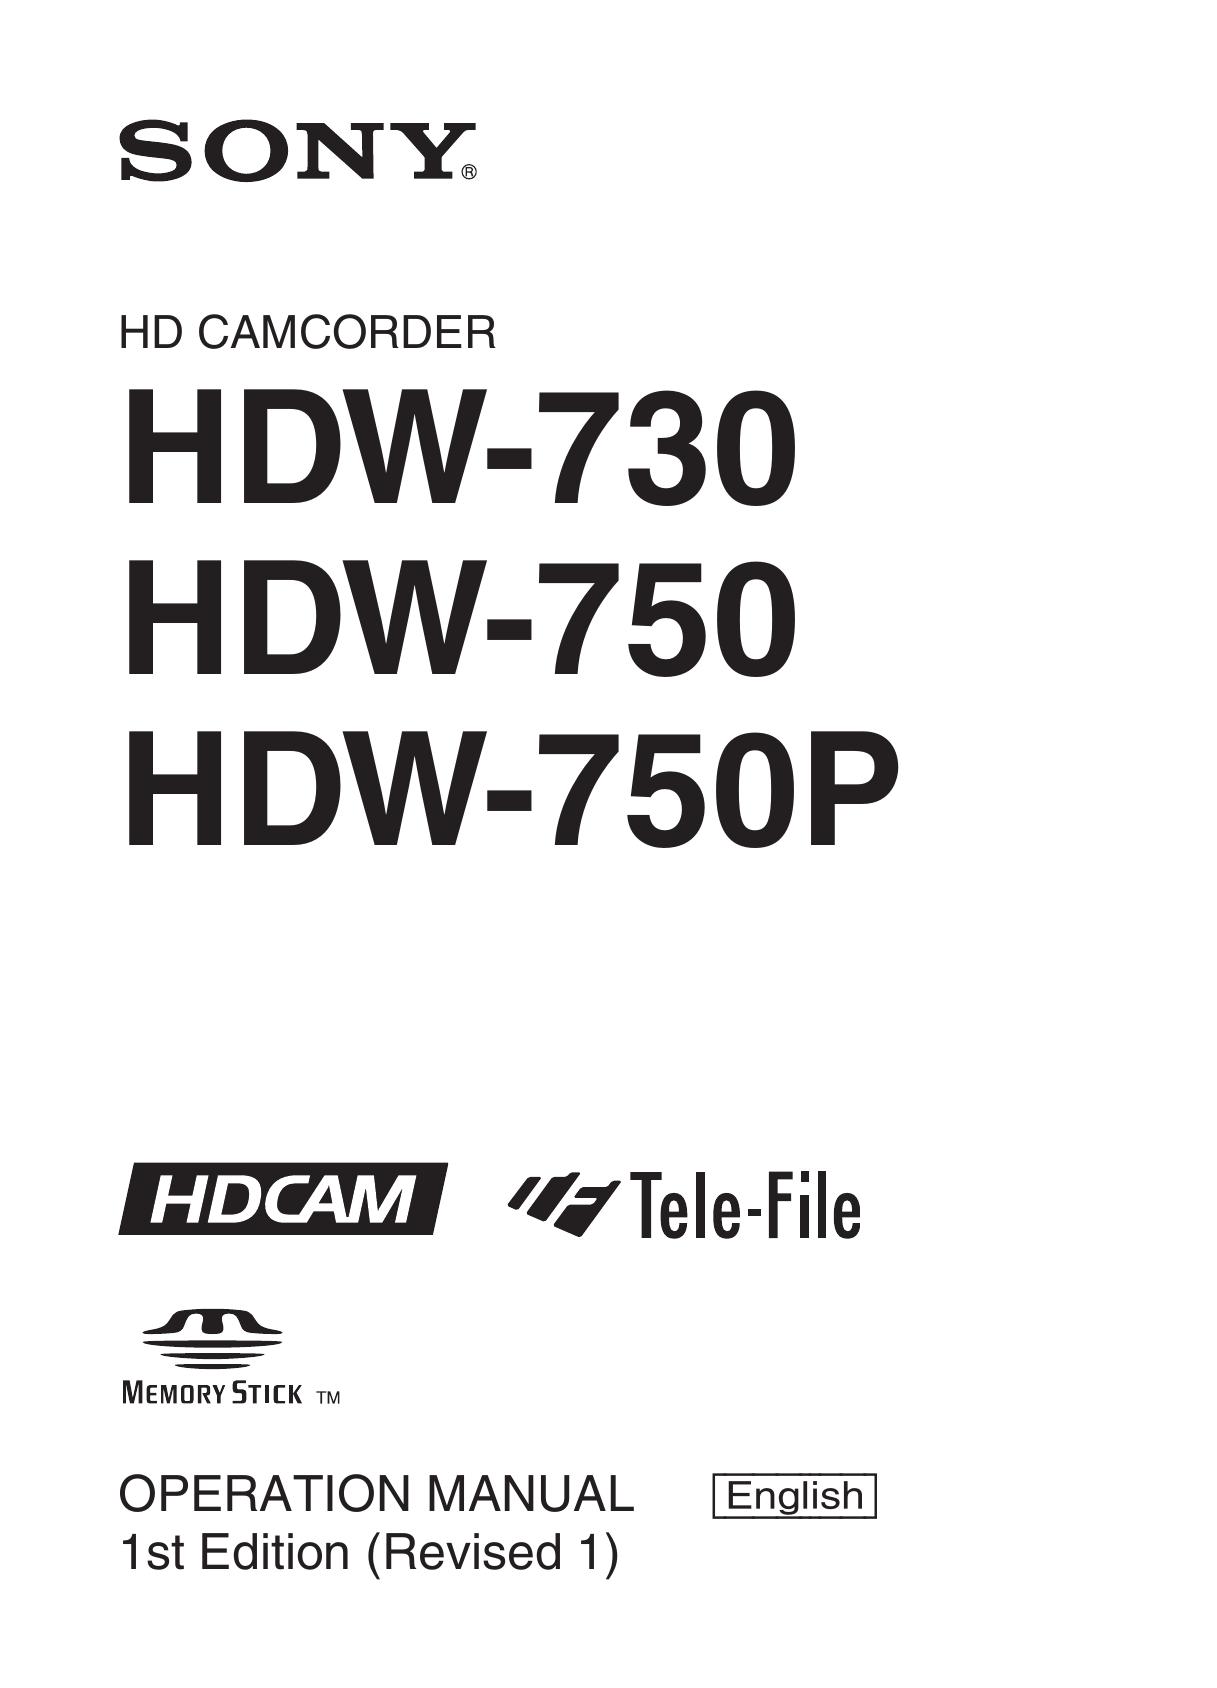 Yamaha HDW-750P Camcorder User Manual